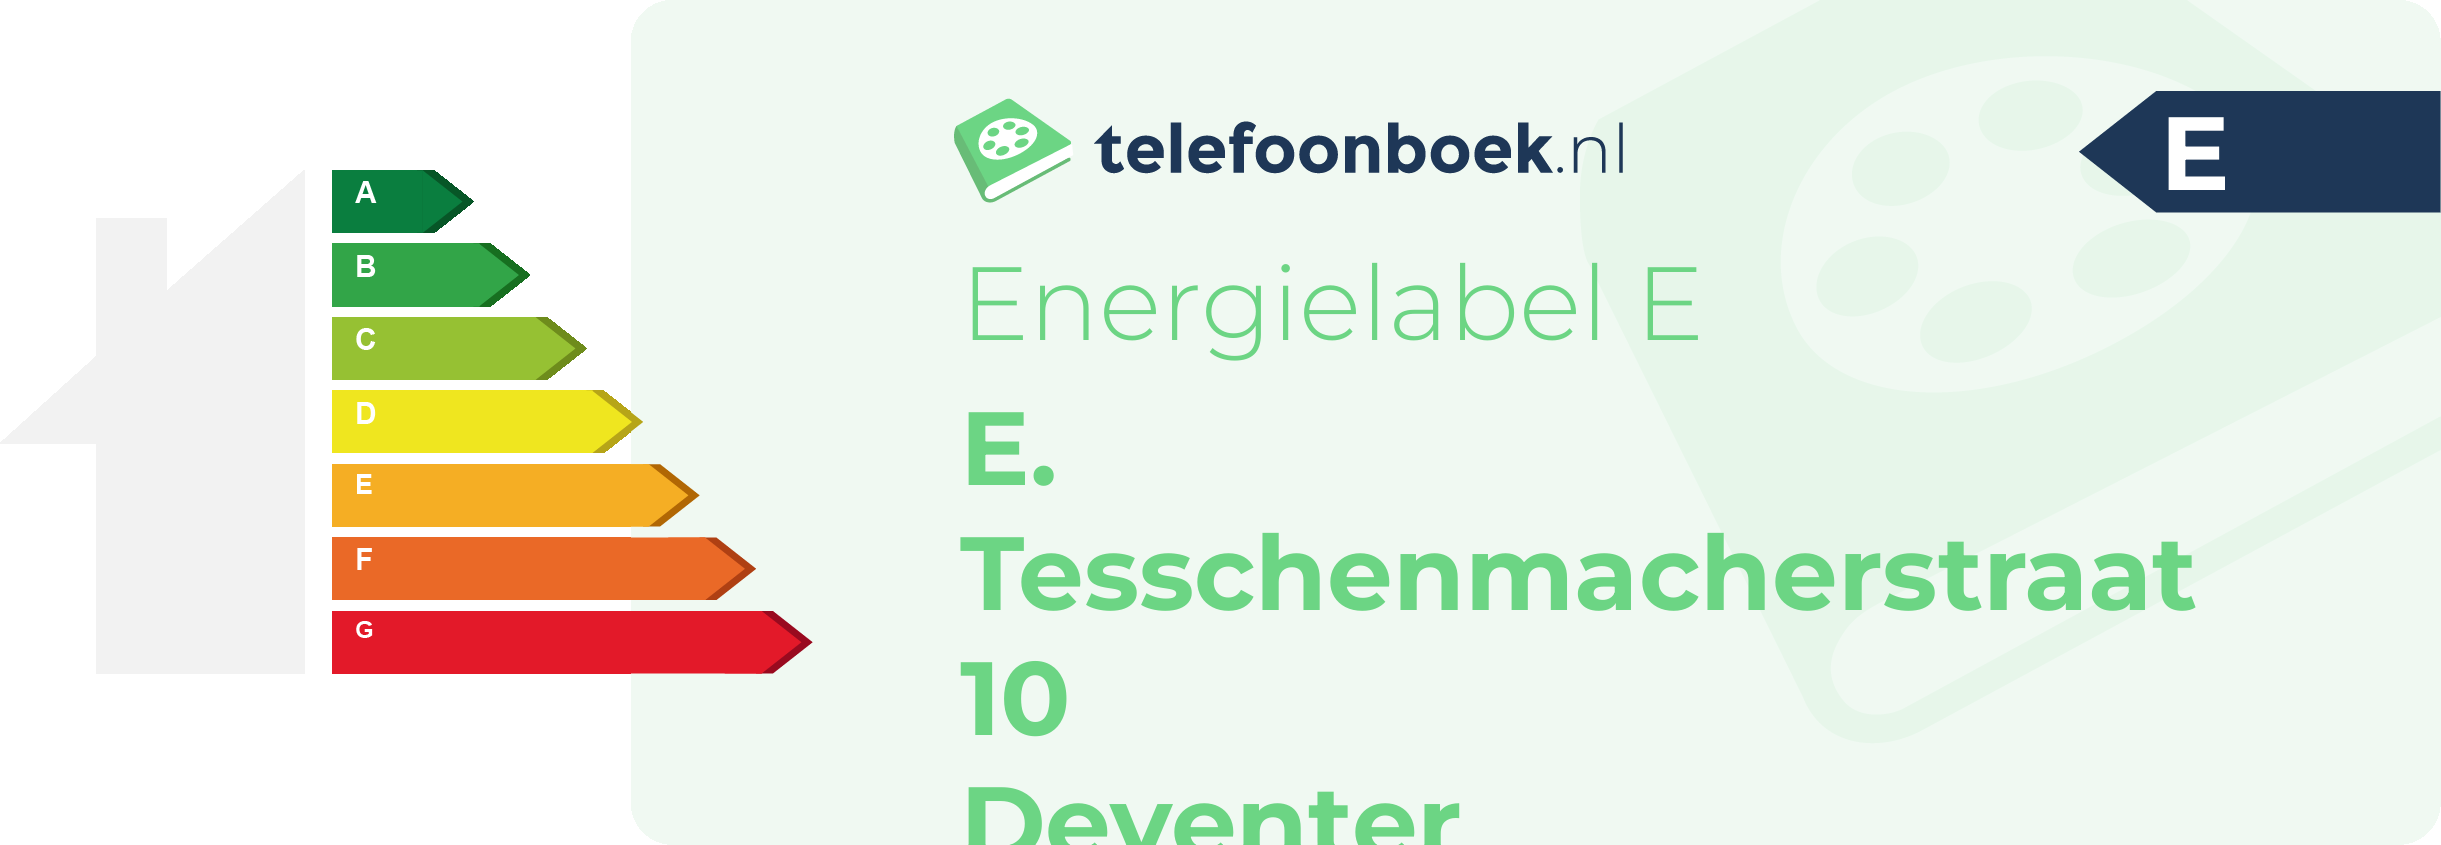 Energielabel E. Tesschenmacherstraat 10 Deventer